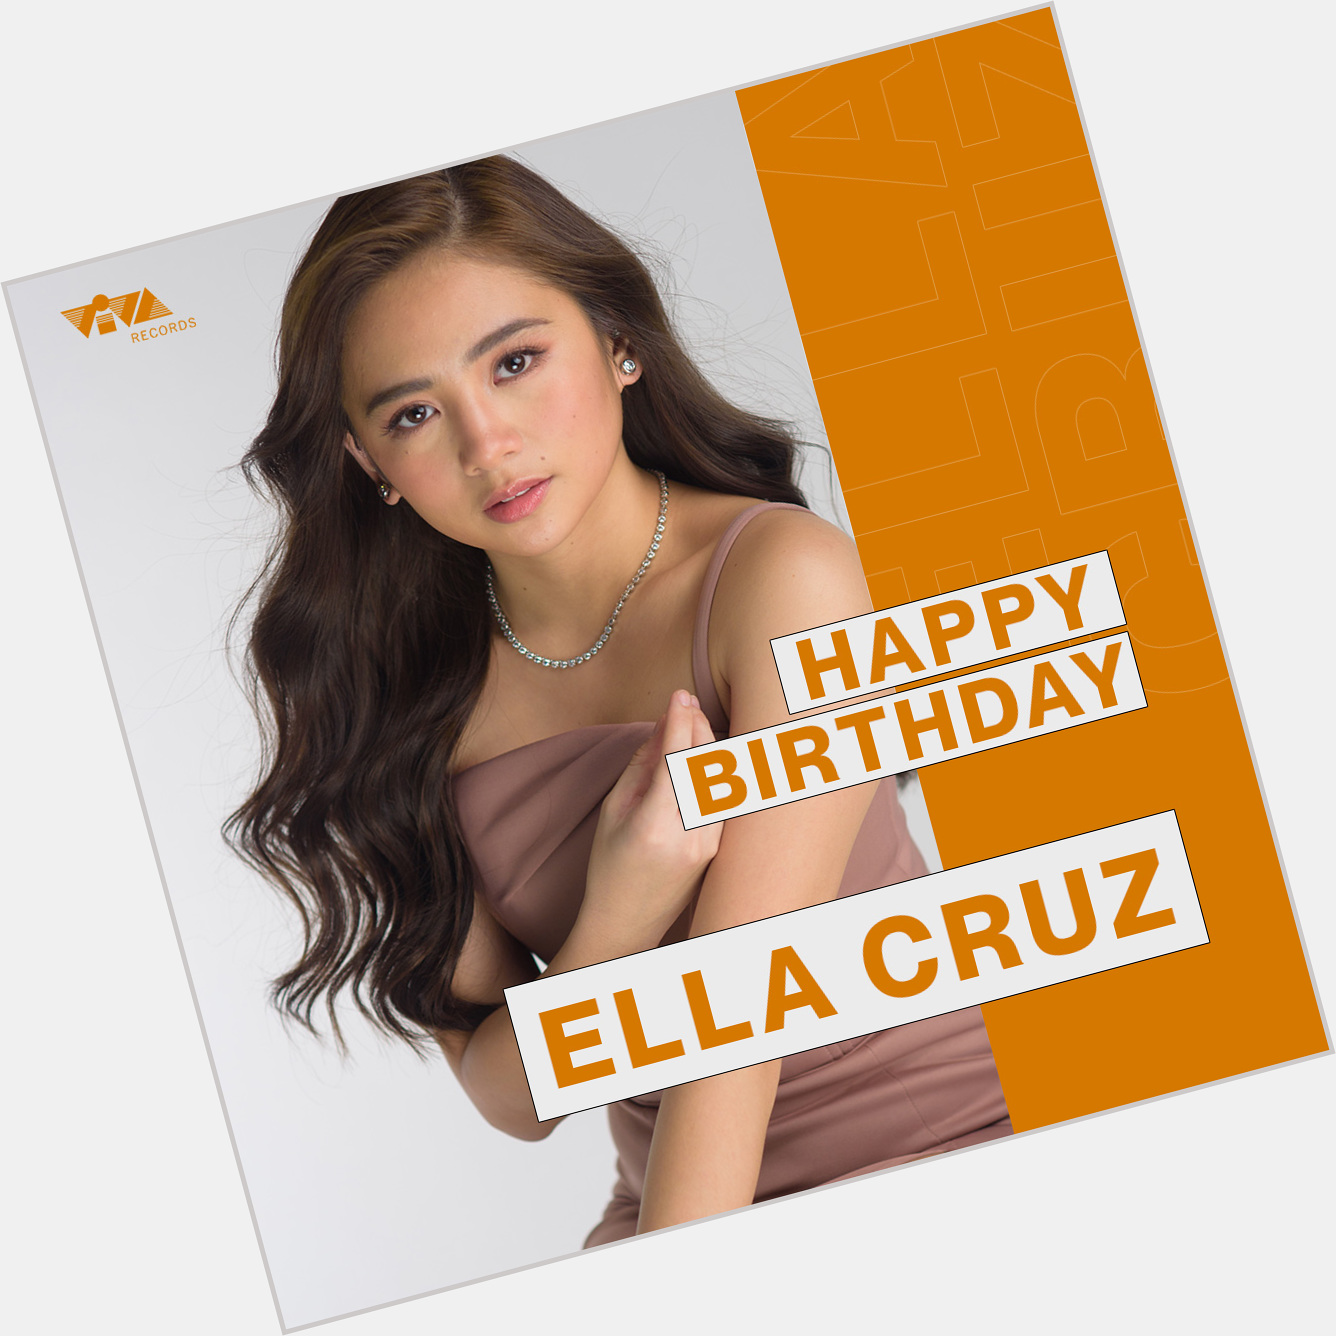 Happy Birthday, Ella Cruz!

Love from your Viva Records Family. 